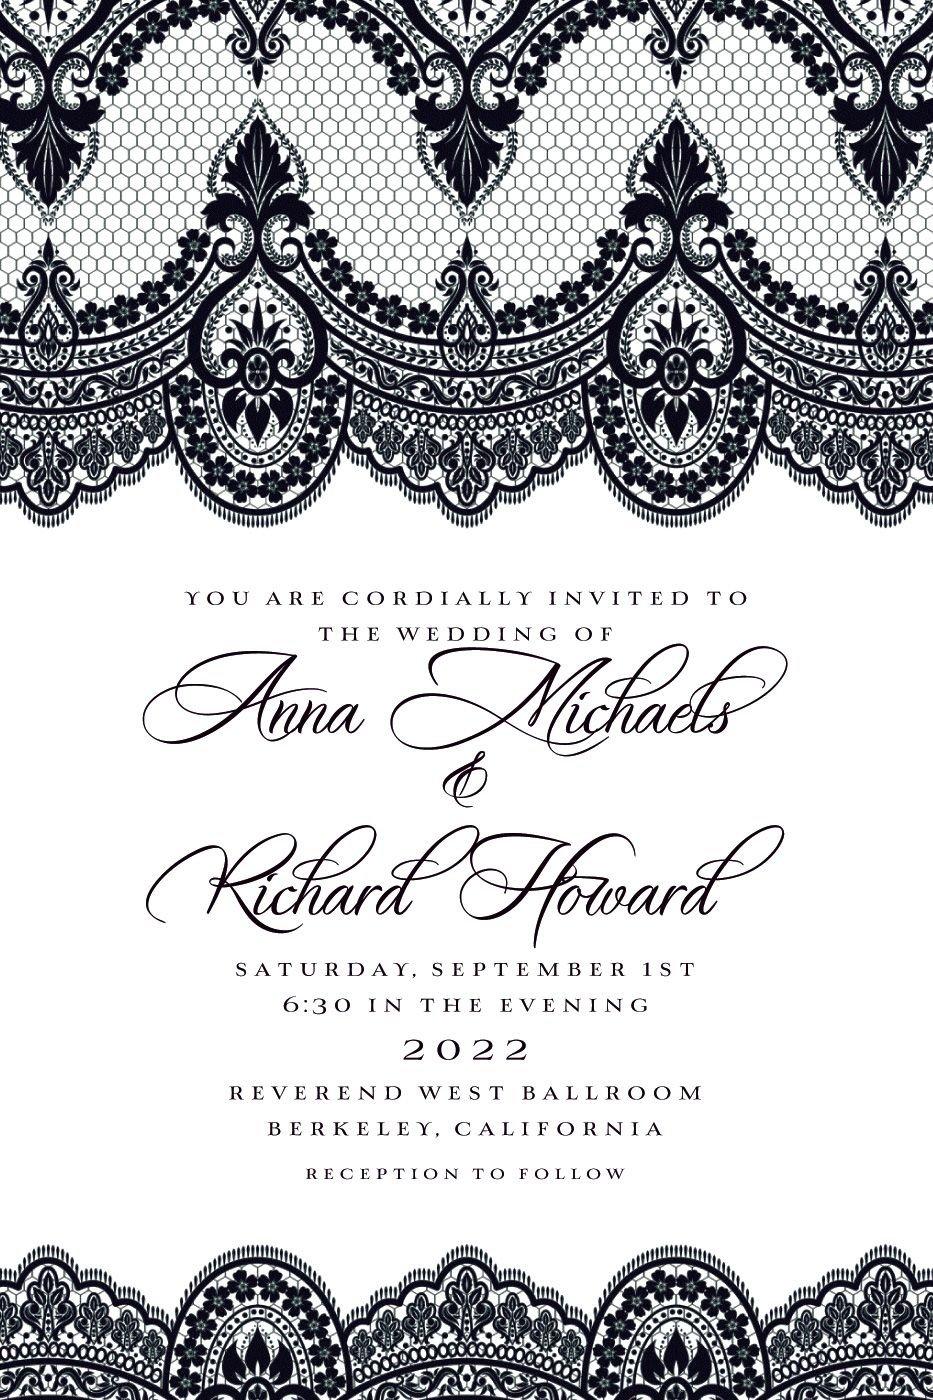 Custom Black & White Lace Wedding Invitation 